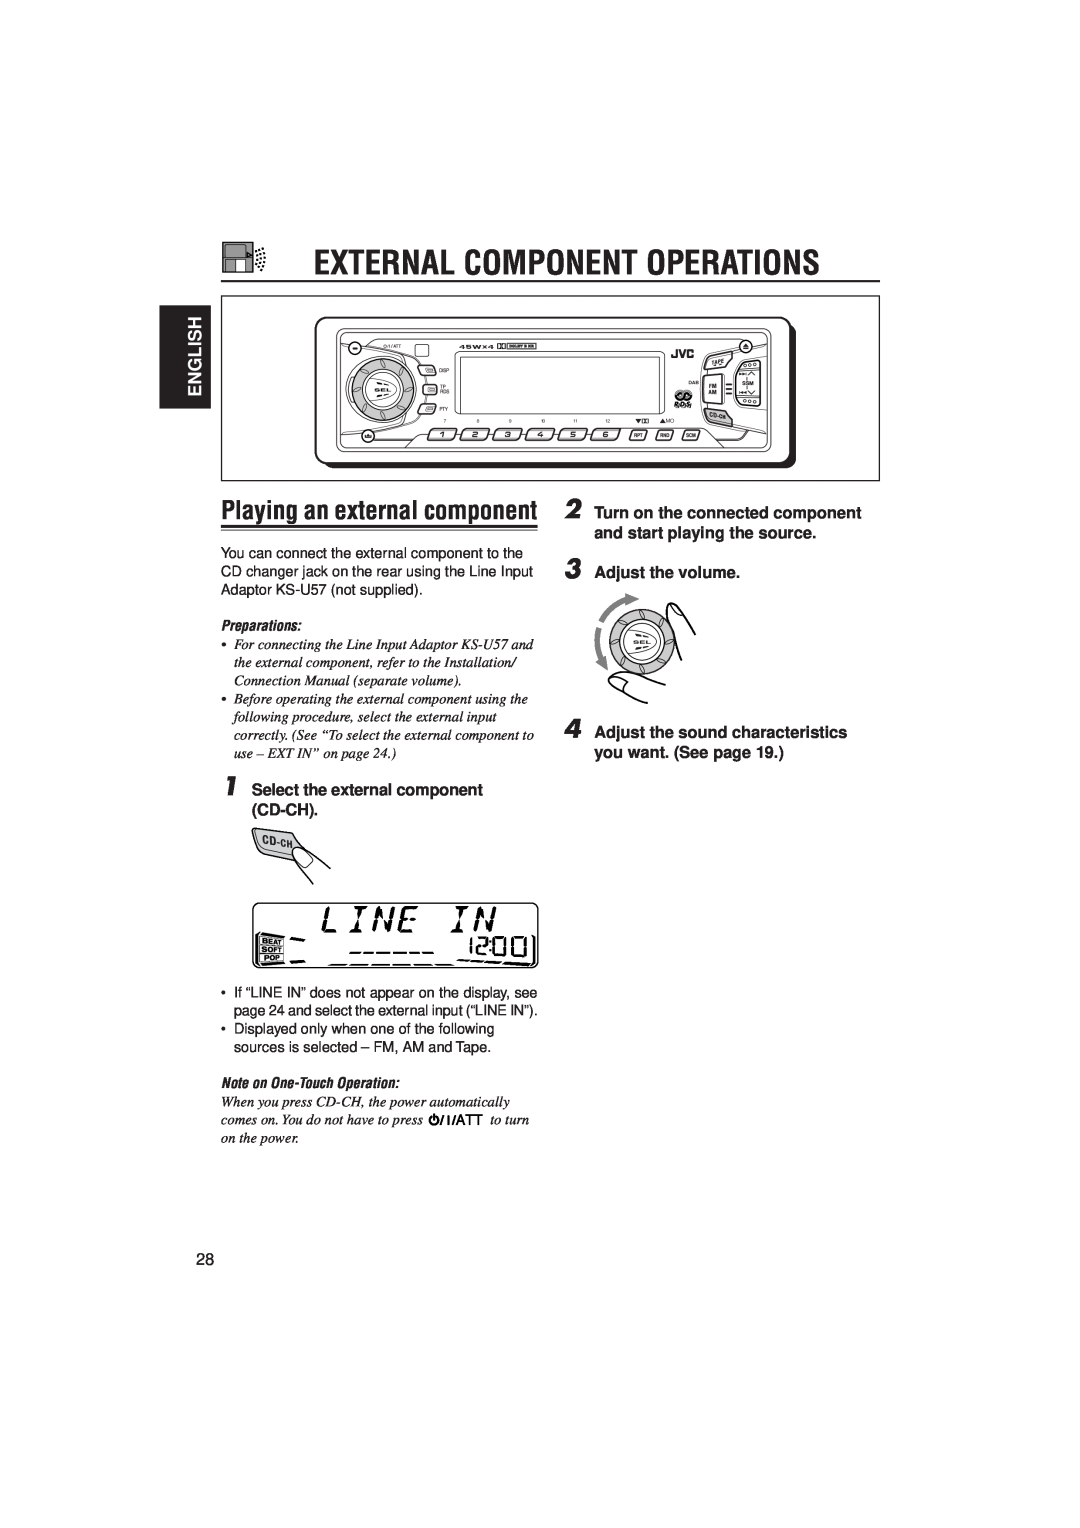 JVC KS-FX822R Playing an external component, External Component Operations, English, Select the external component CD-CH 